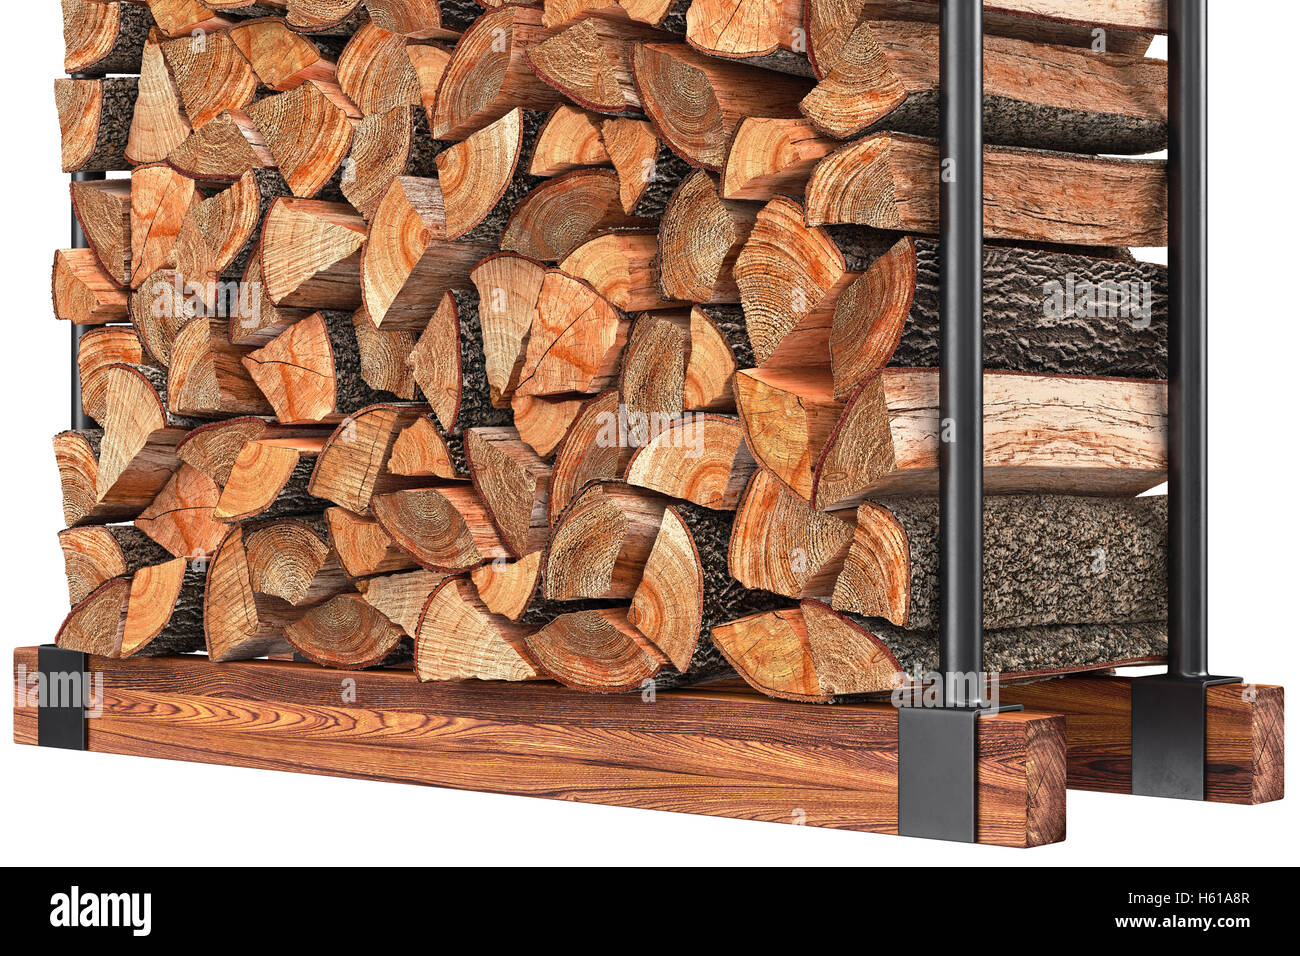 Firewood stack metal rack, close view Stock Photo